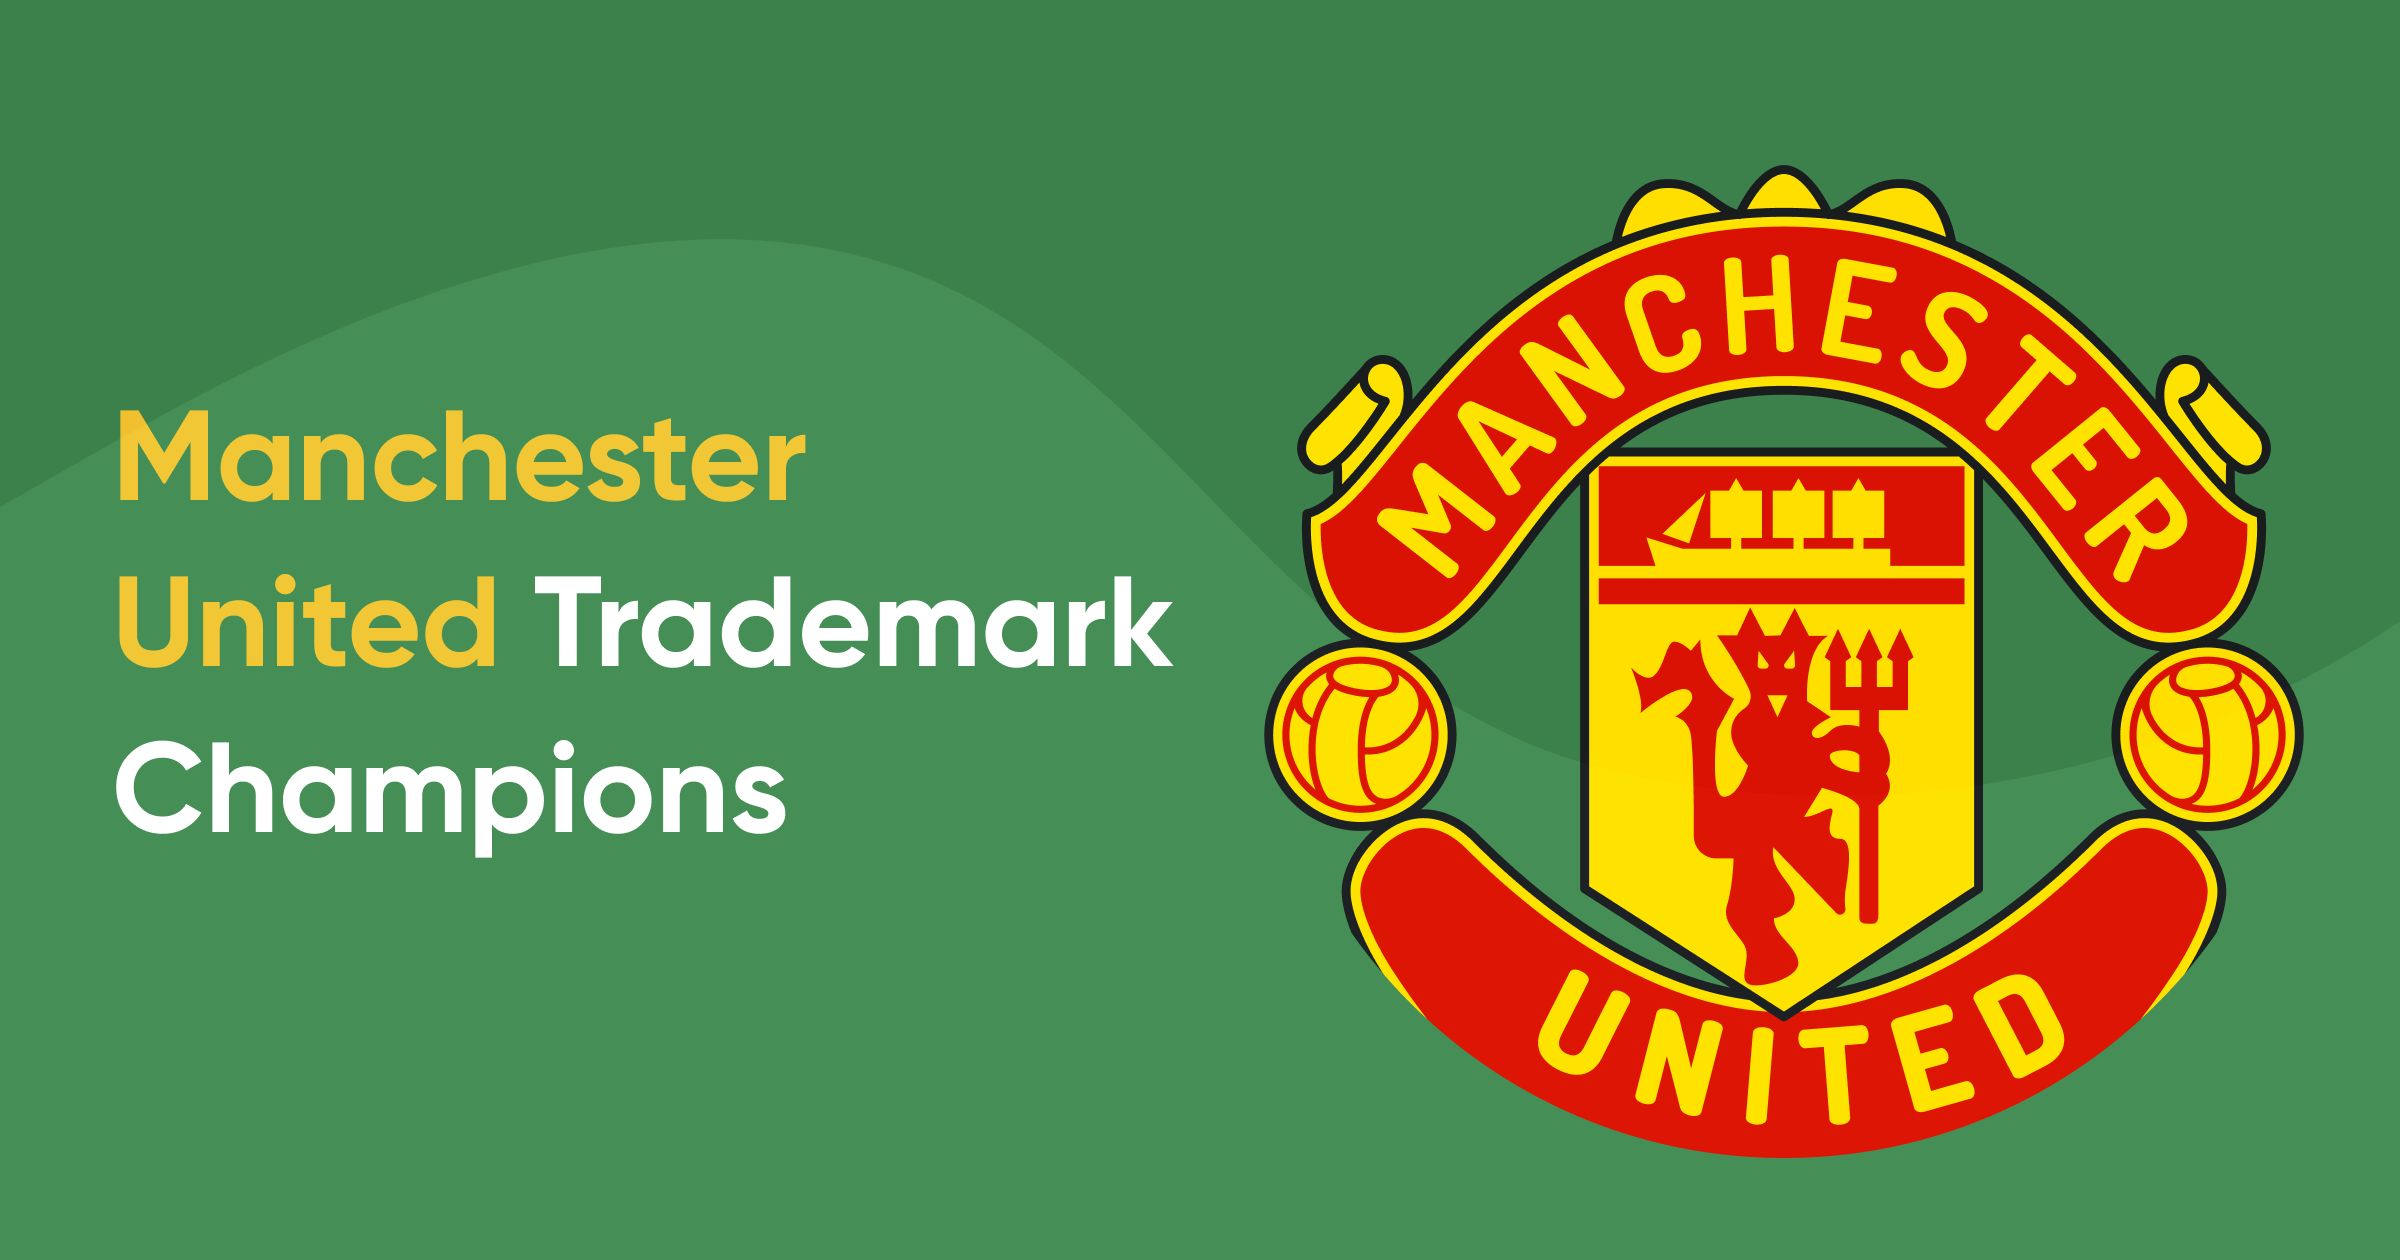 Manchester United trademark champions